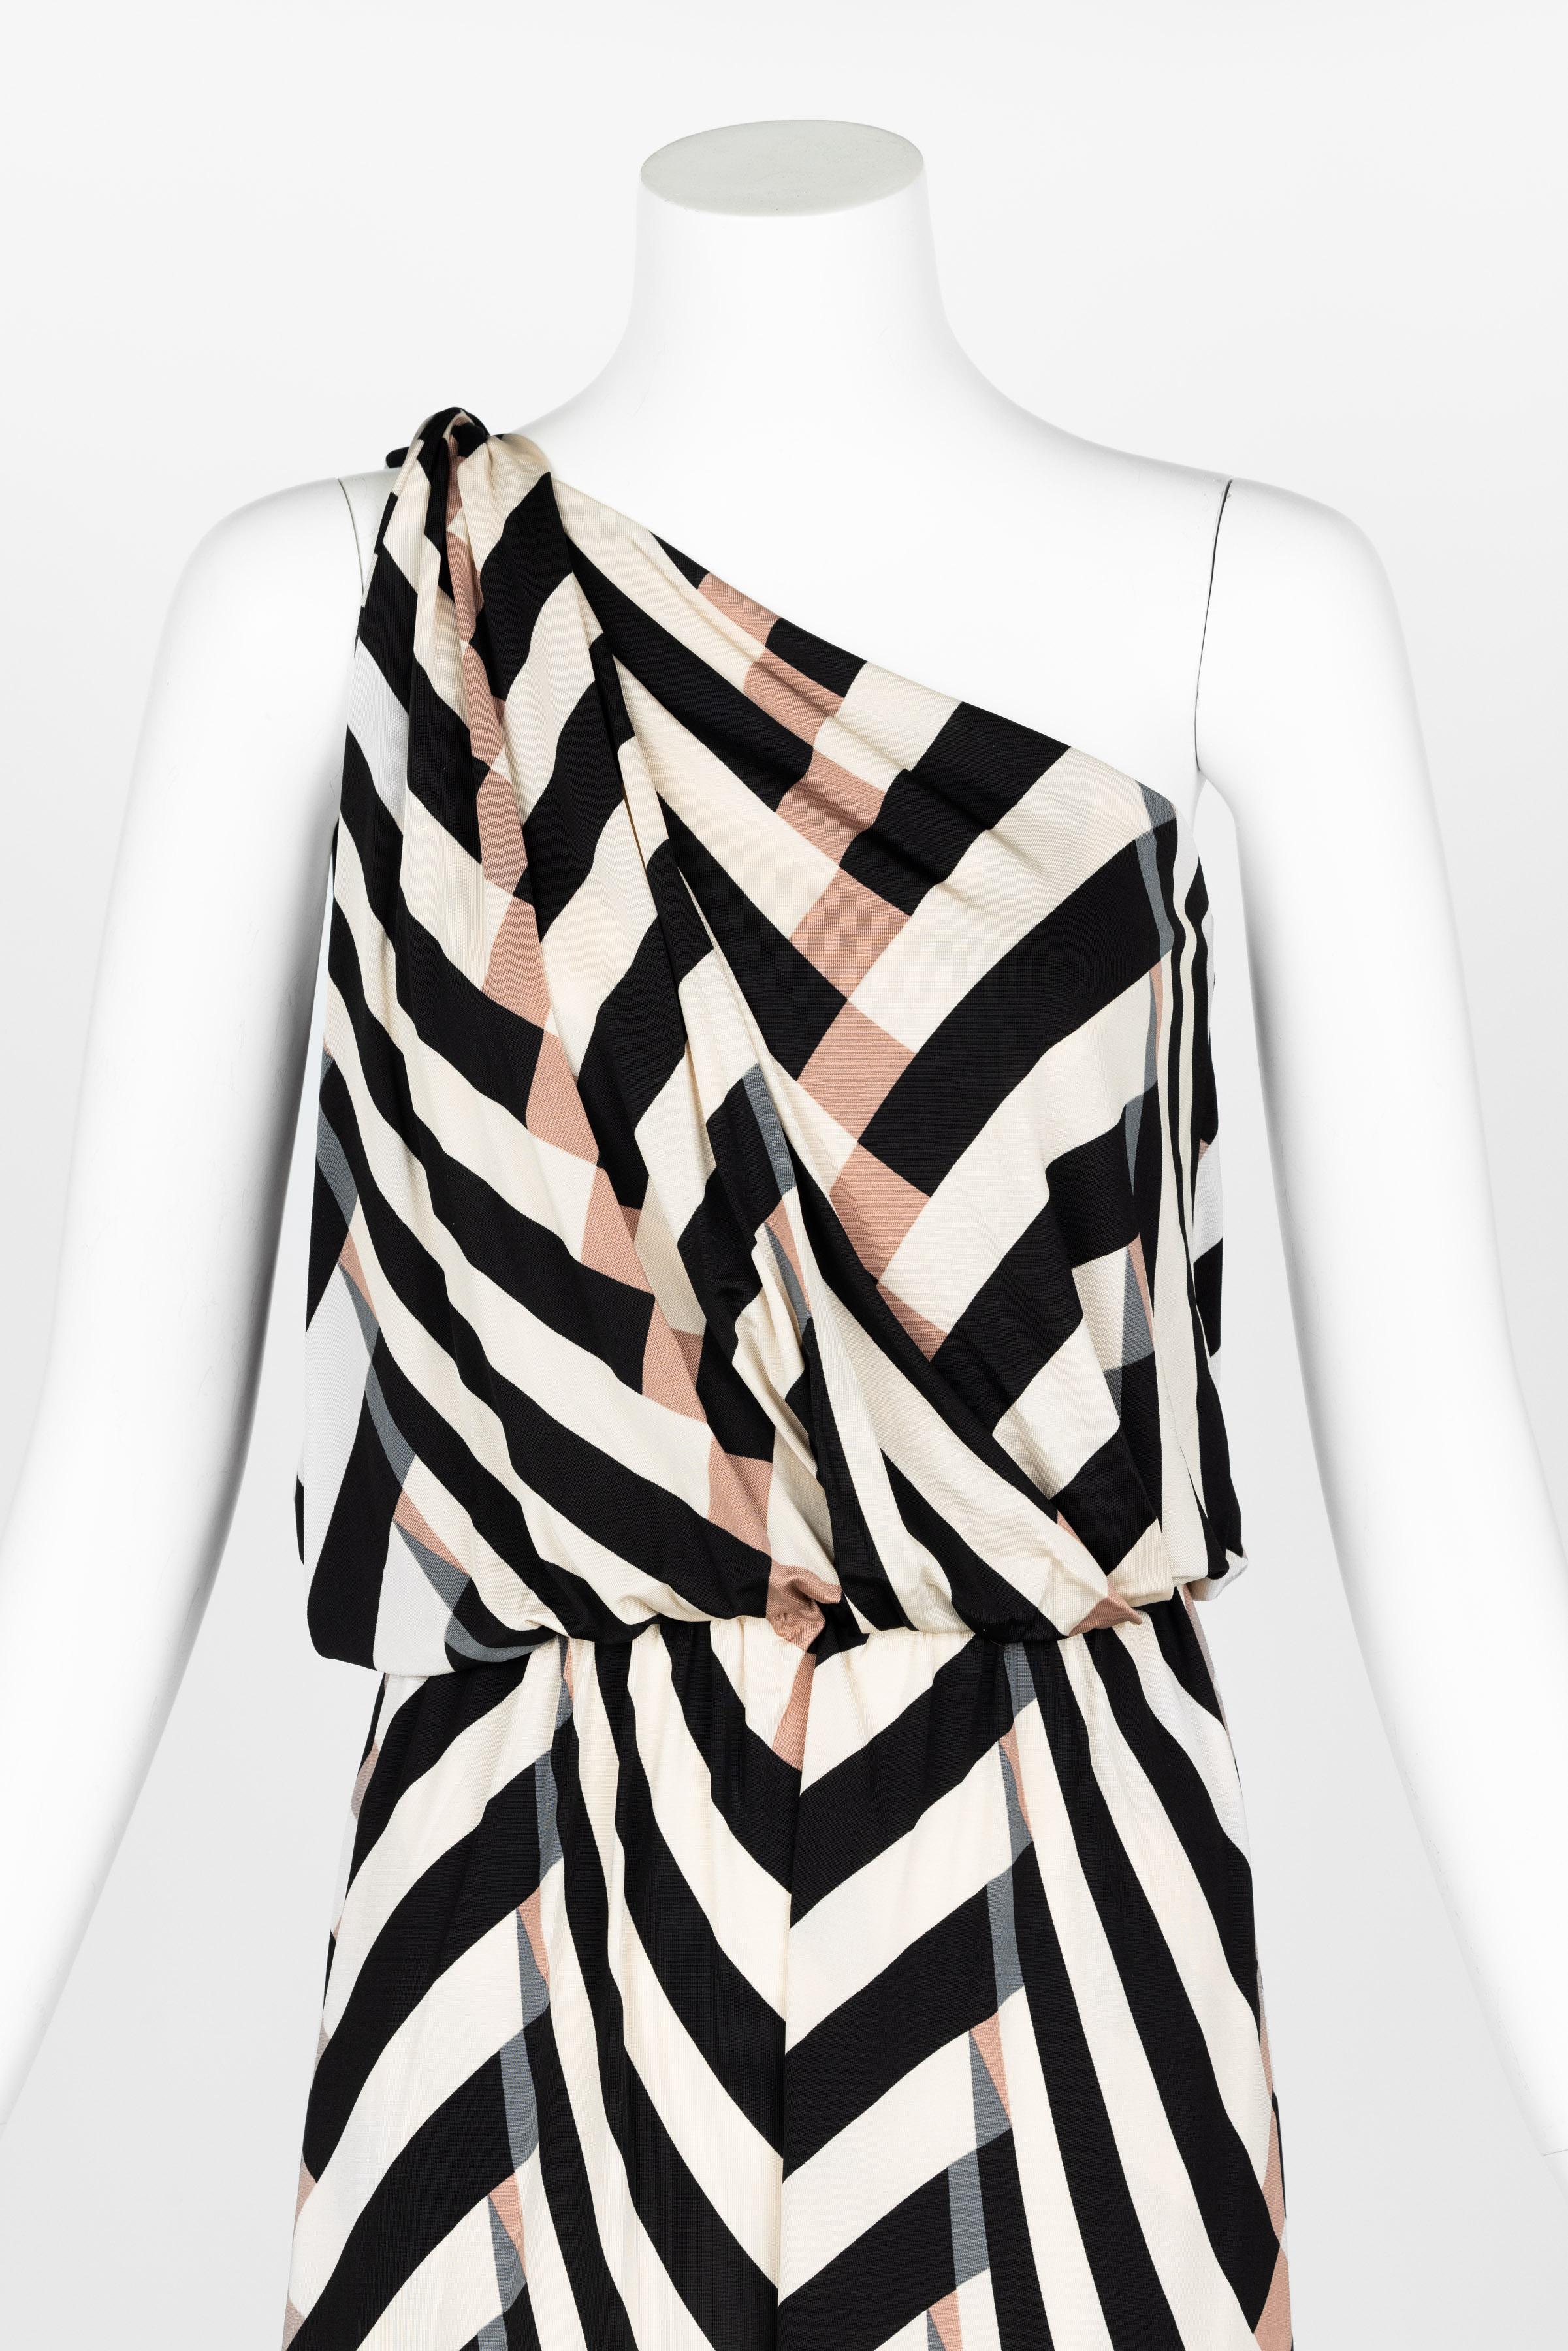 Lanvin  Alber Elbaz Spring 2015 One Shoulder Chevron Striped Jersey Dress For Sale 4